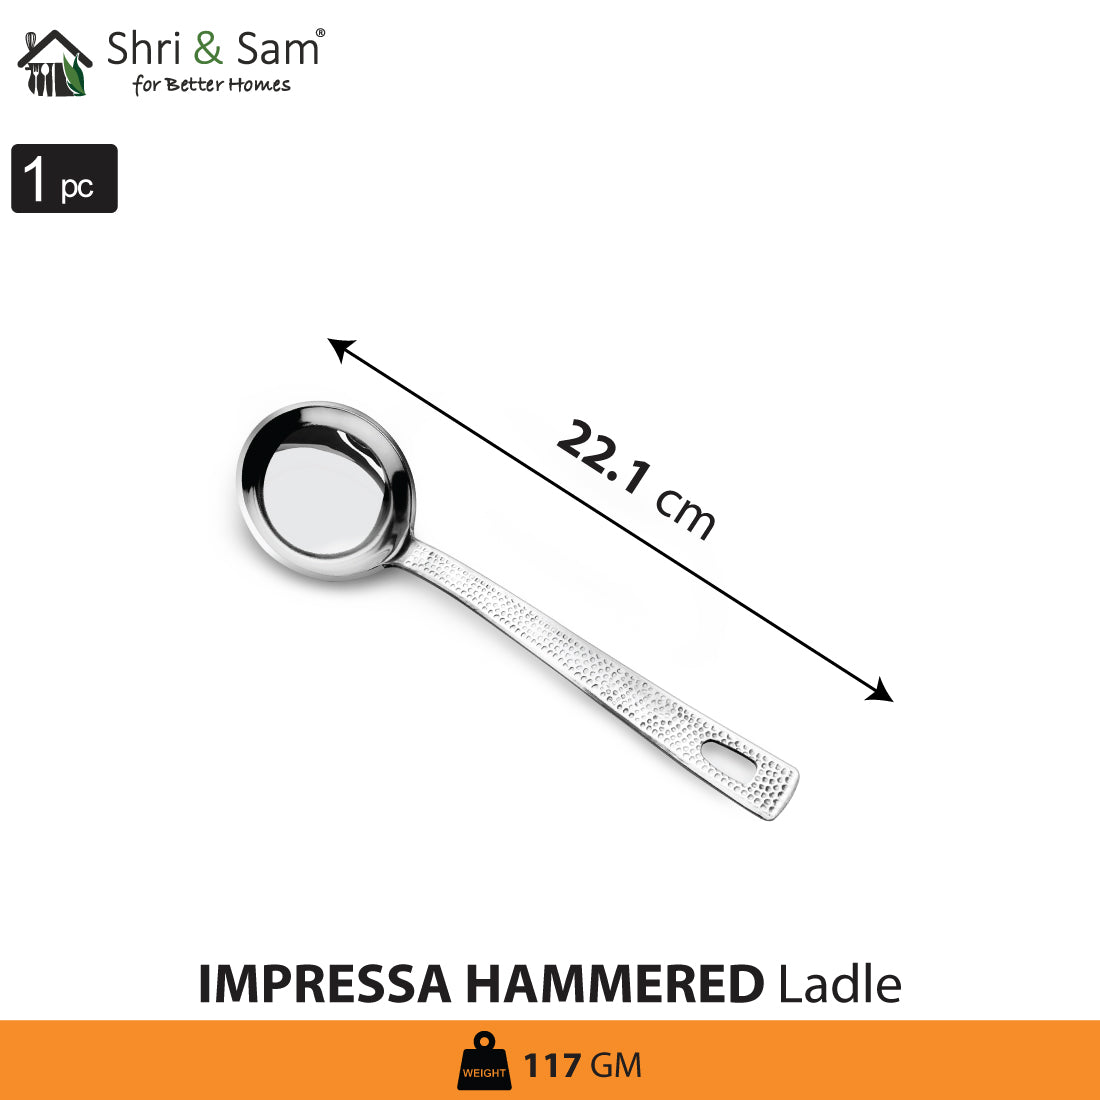 Stainless Steel Ladle Impressa Hammered